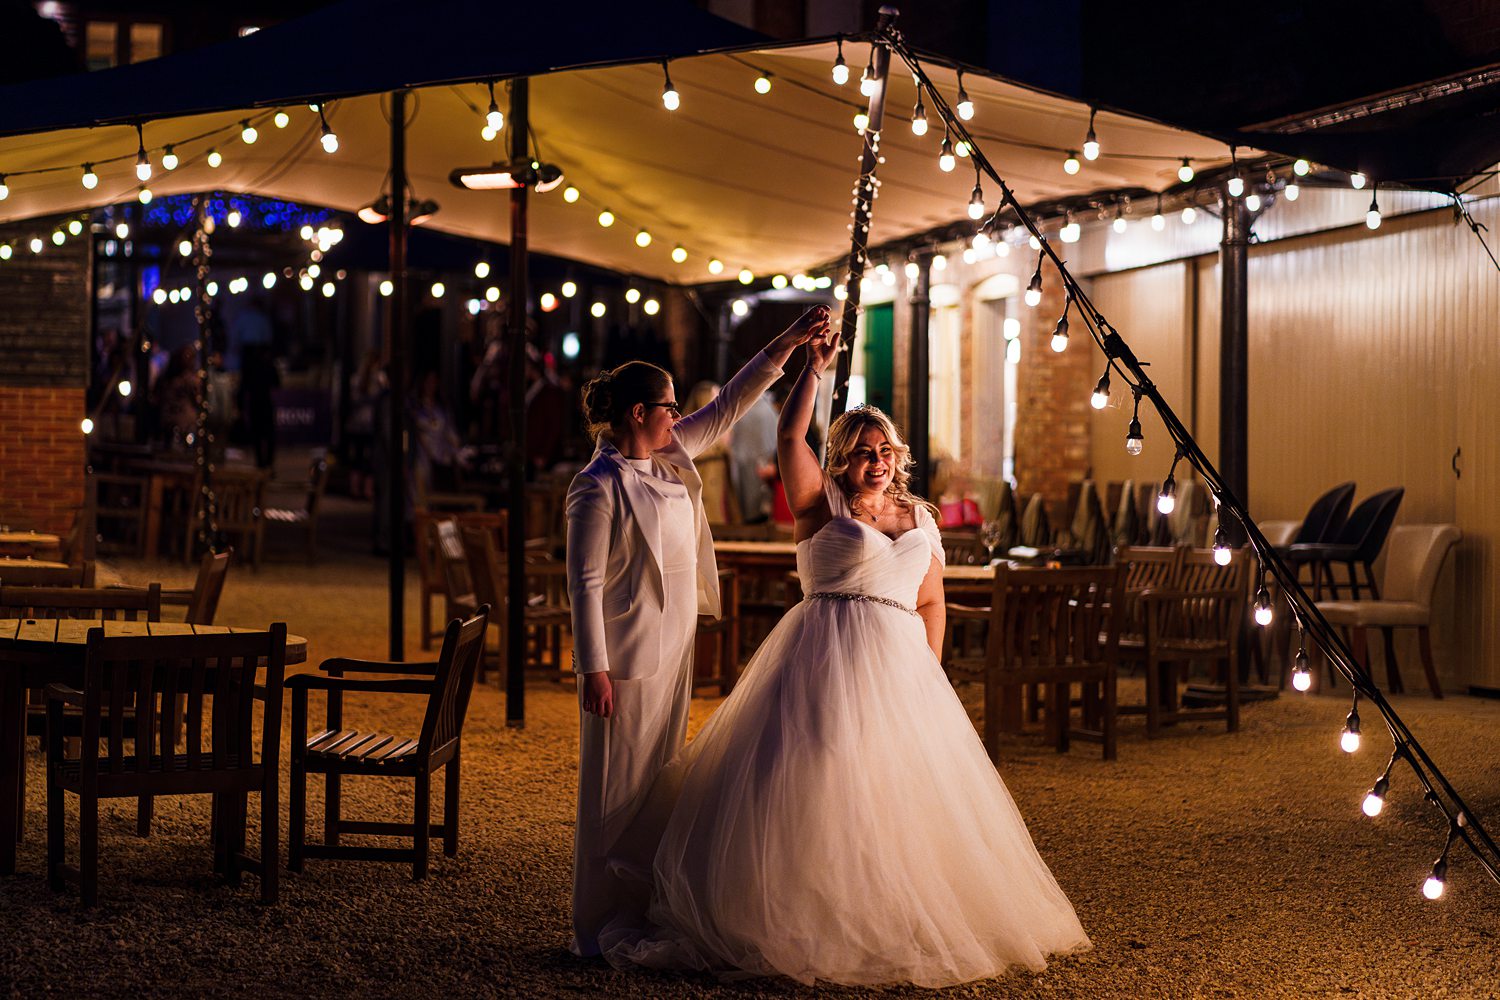 Bride and bridesmaid dancing under fairy lights at evening wedding.